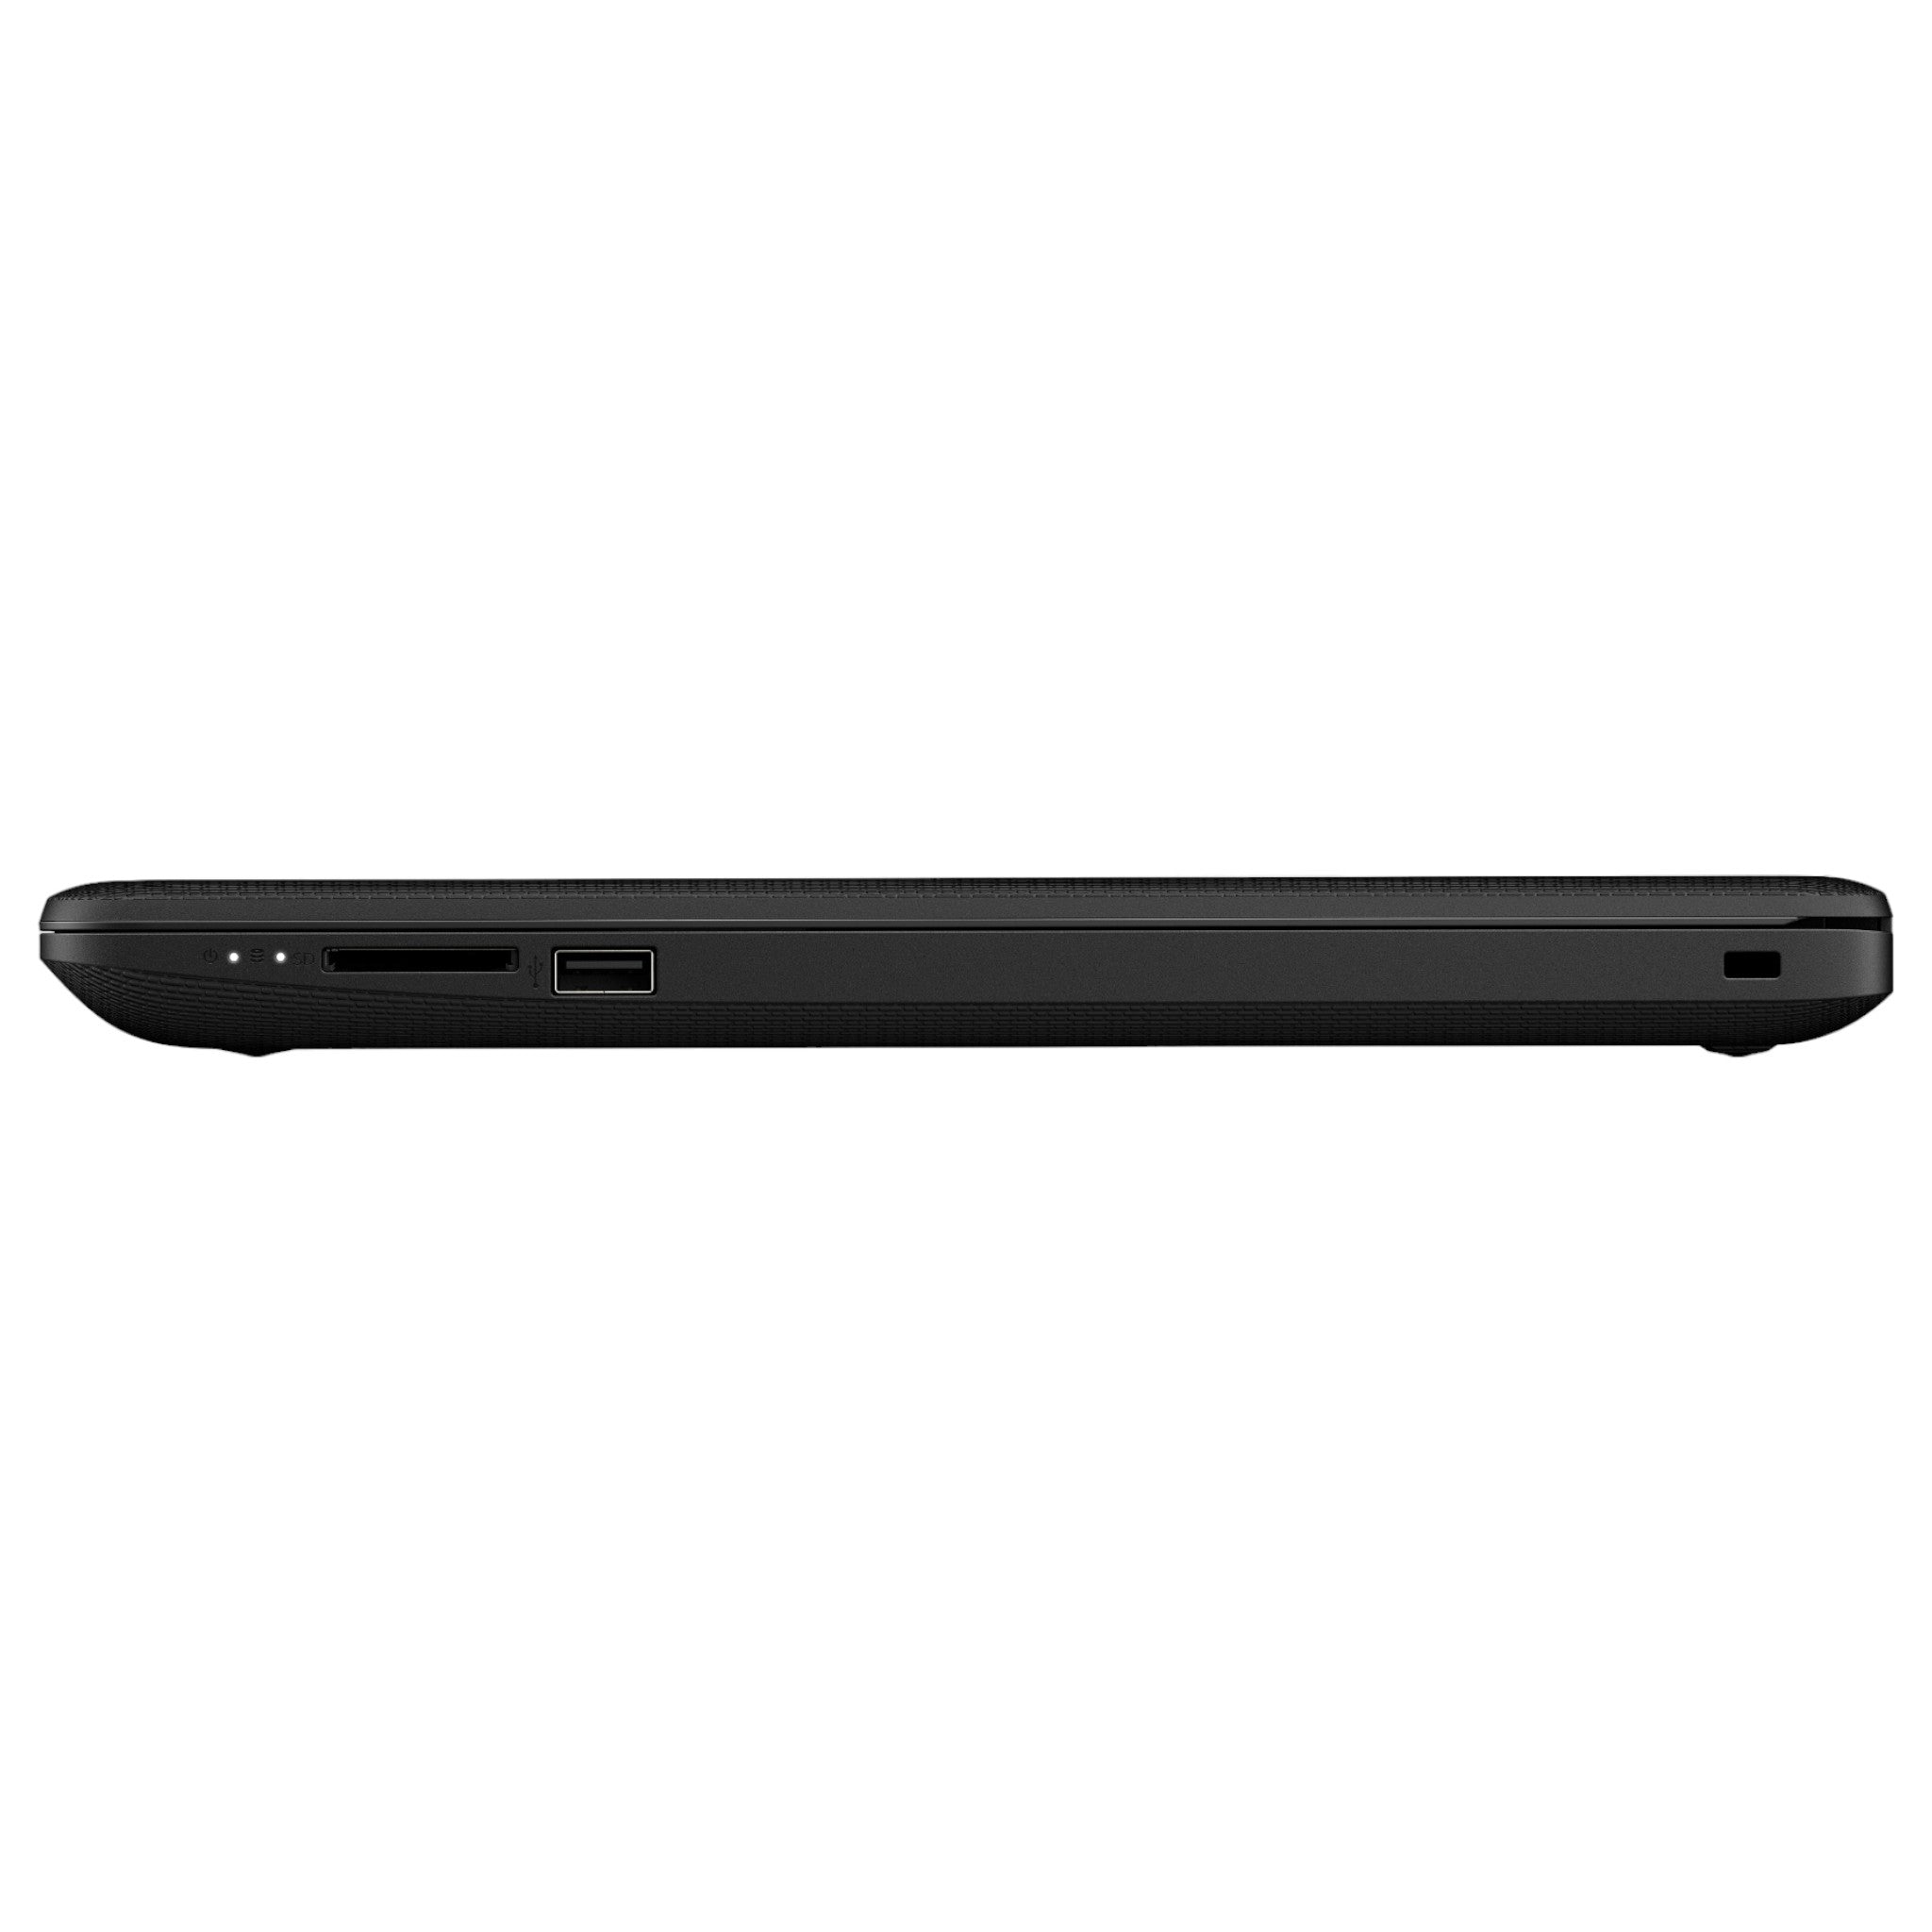 HP Notebook 15-da0361ng 15,6" | Celeron N4000 | 4 GB | 256 GB SSD | WXGA | Win 10 Home - computify